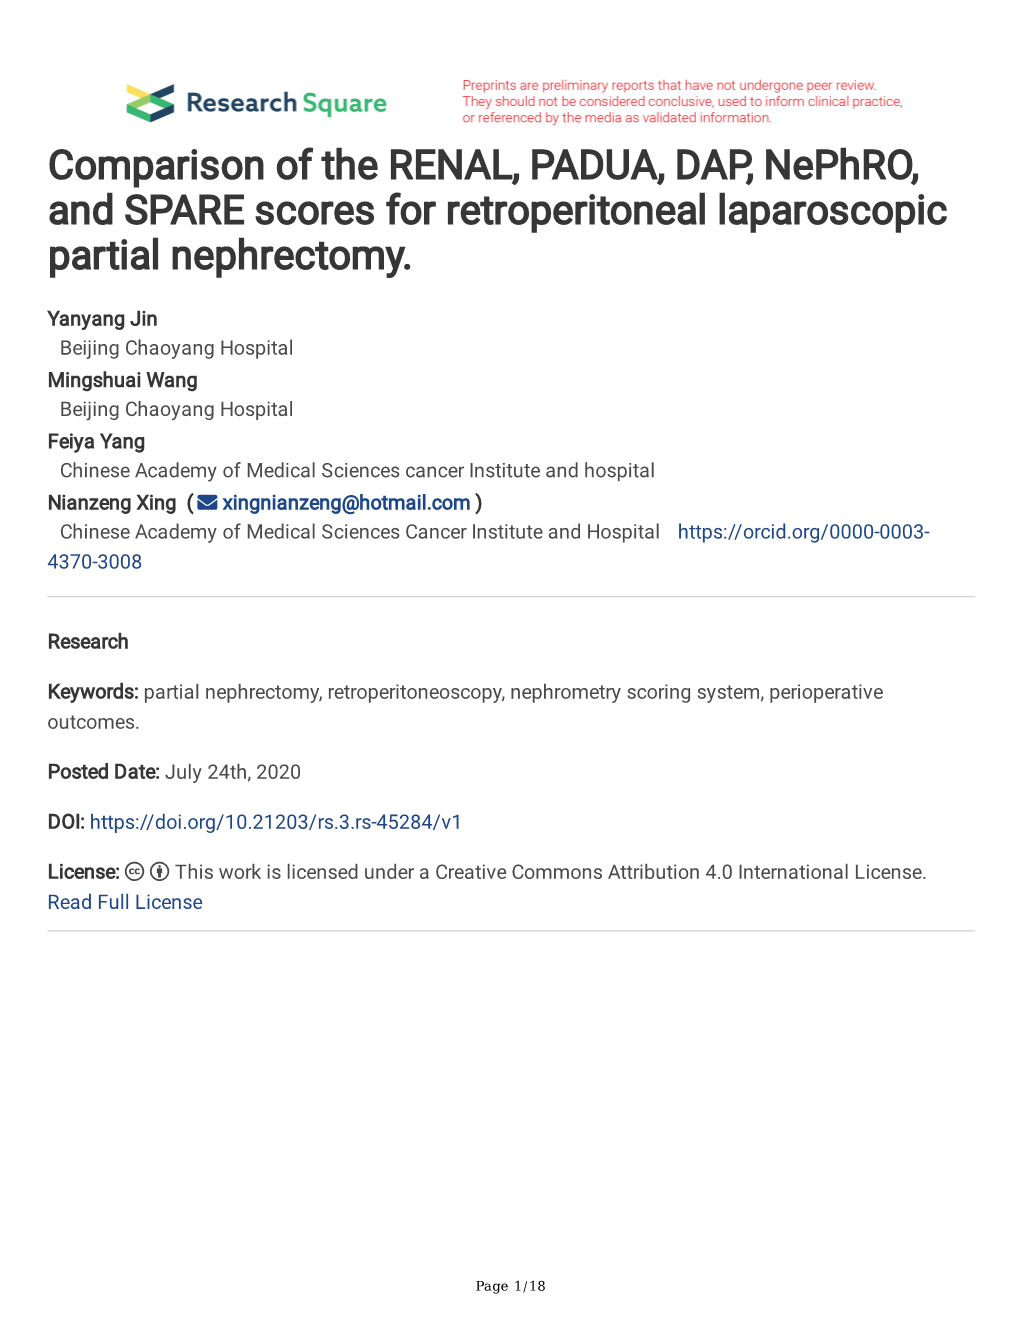 Comparison of the RENAL, PADUA, DAP, Nephro, and SPARE Scores for Retroperitoneal Laparoscopic Partial Nephrectomy